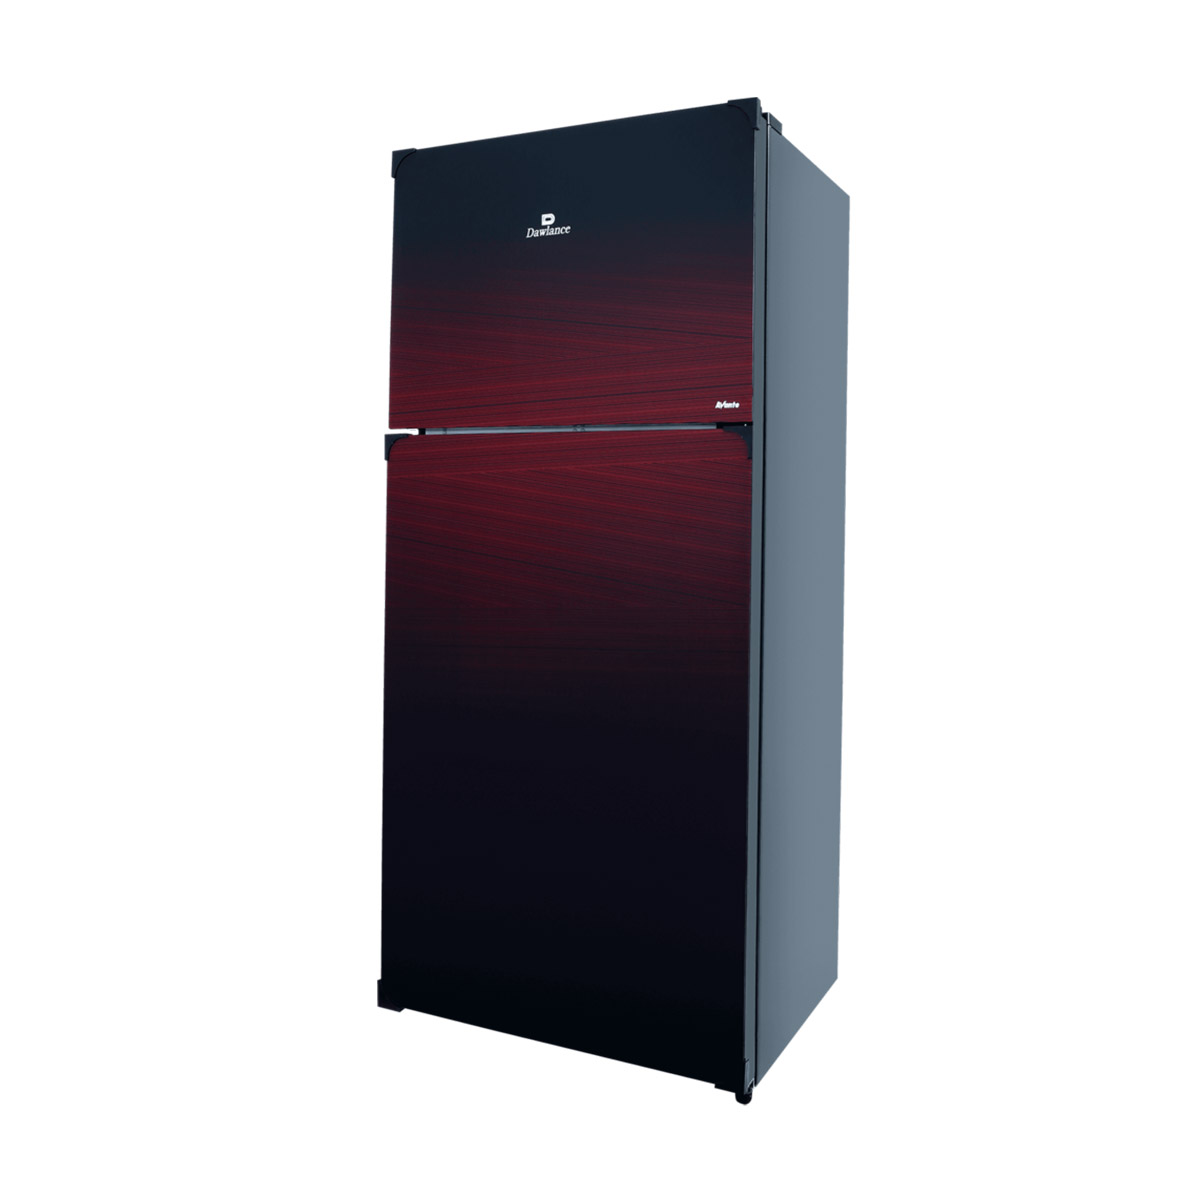 Dawlance Refrigerator 91999 Avante Noir Red